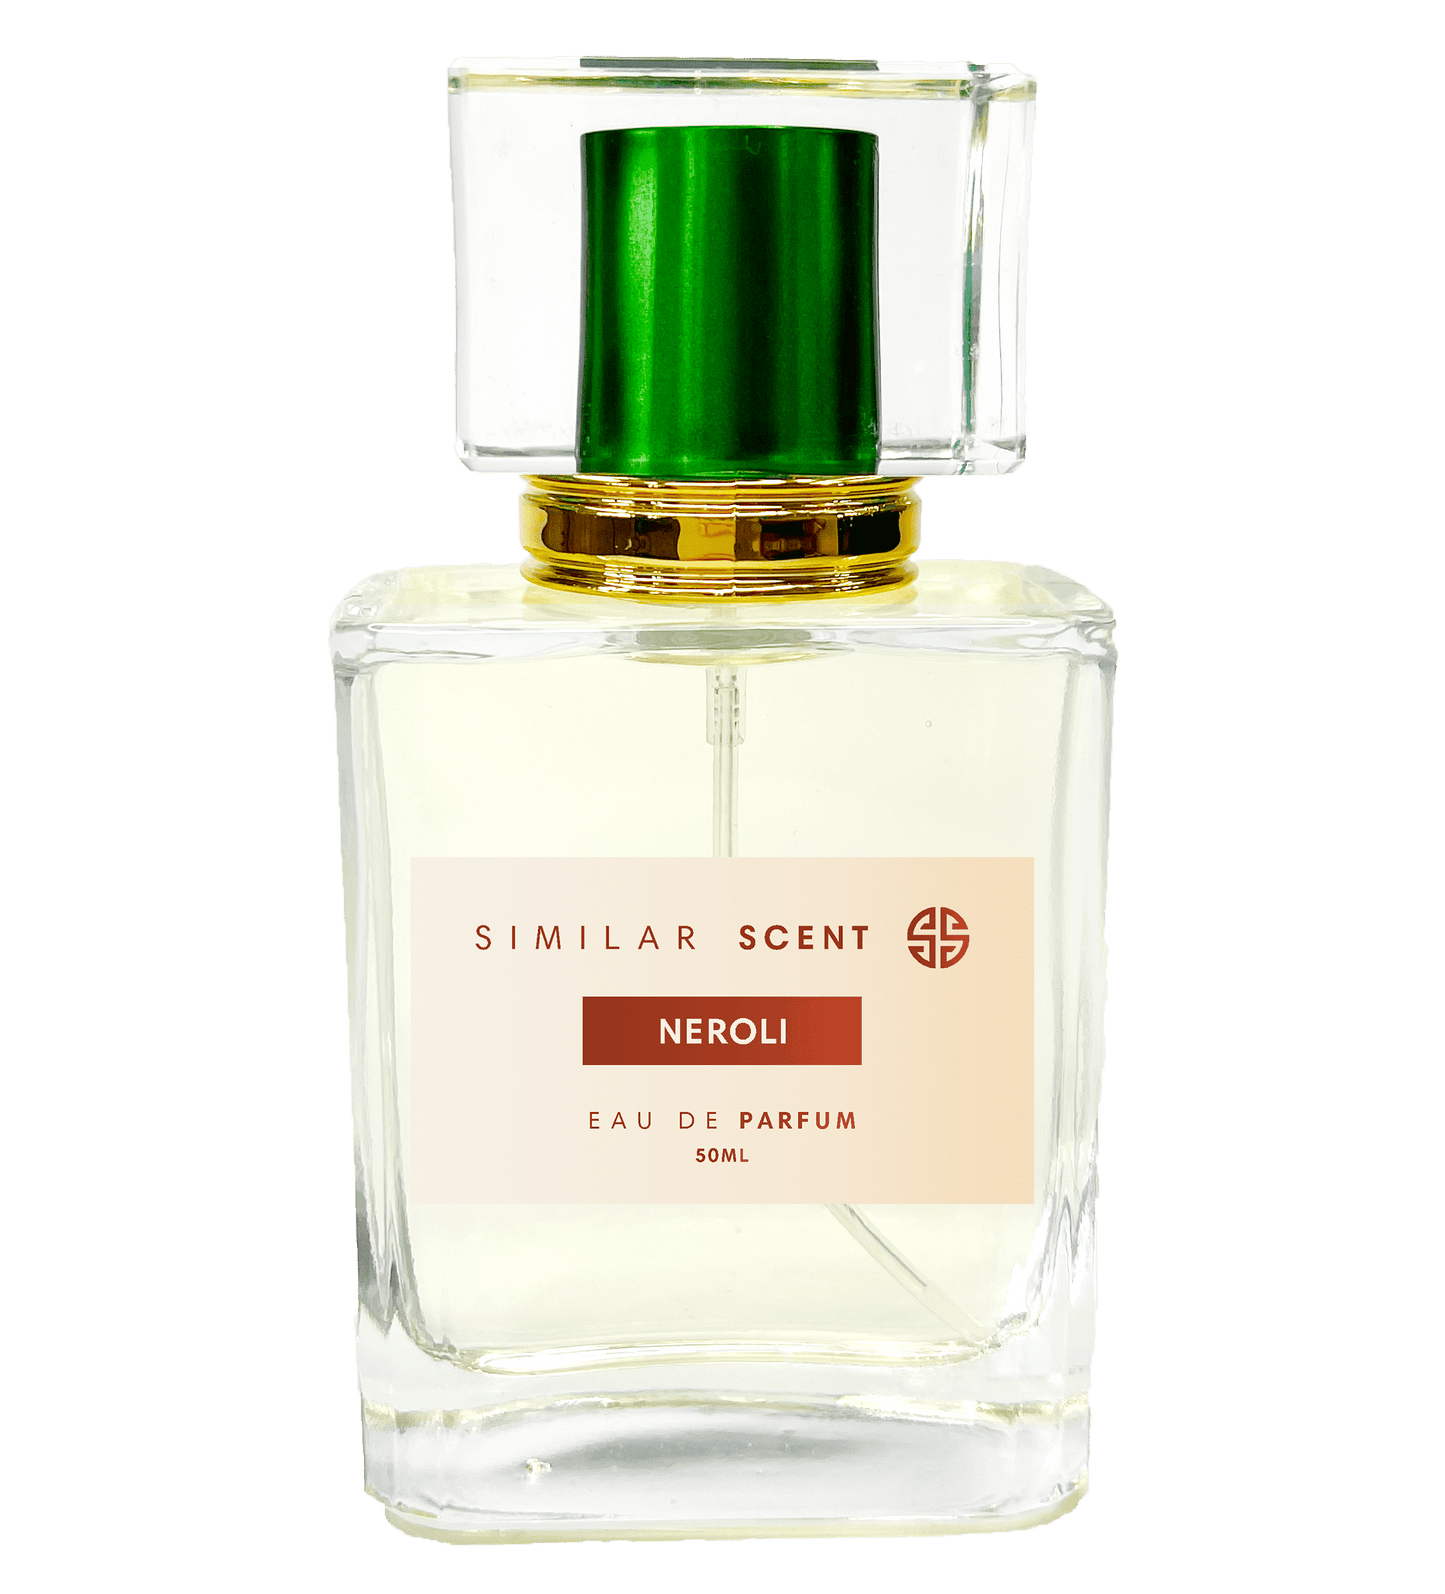 Neroli Portofino parfum - Similar Scent NEROLI - undefined